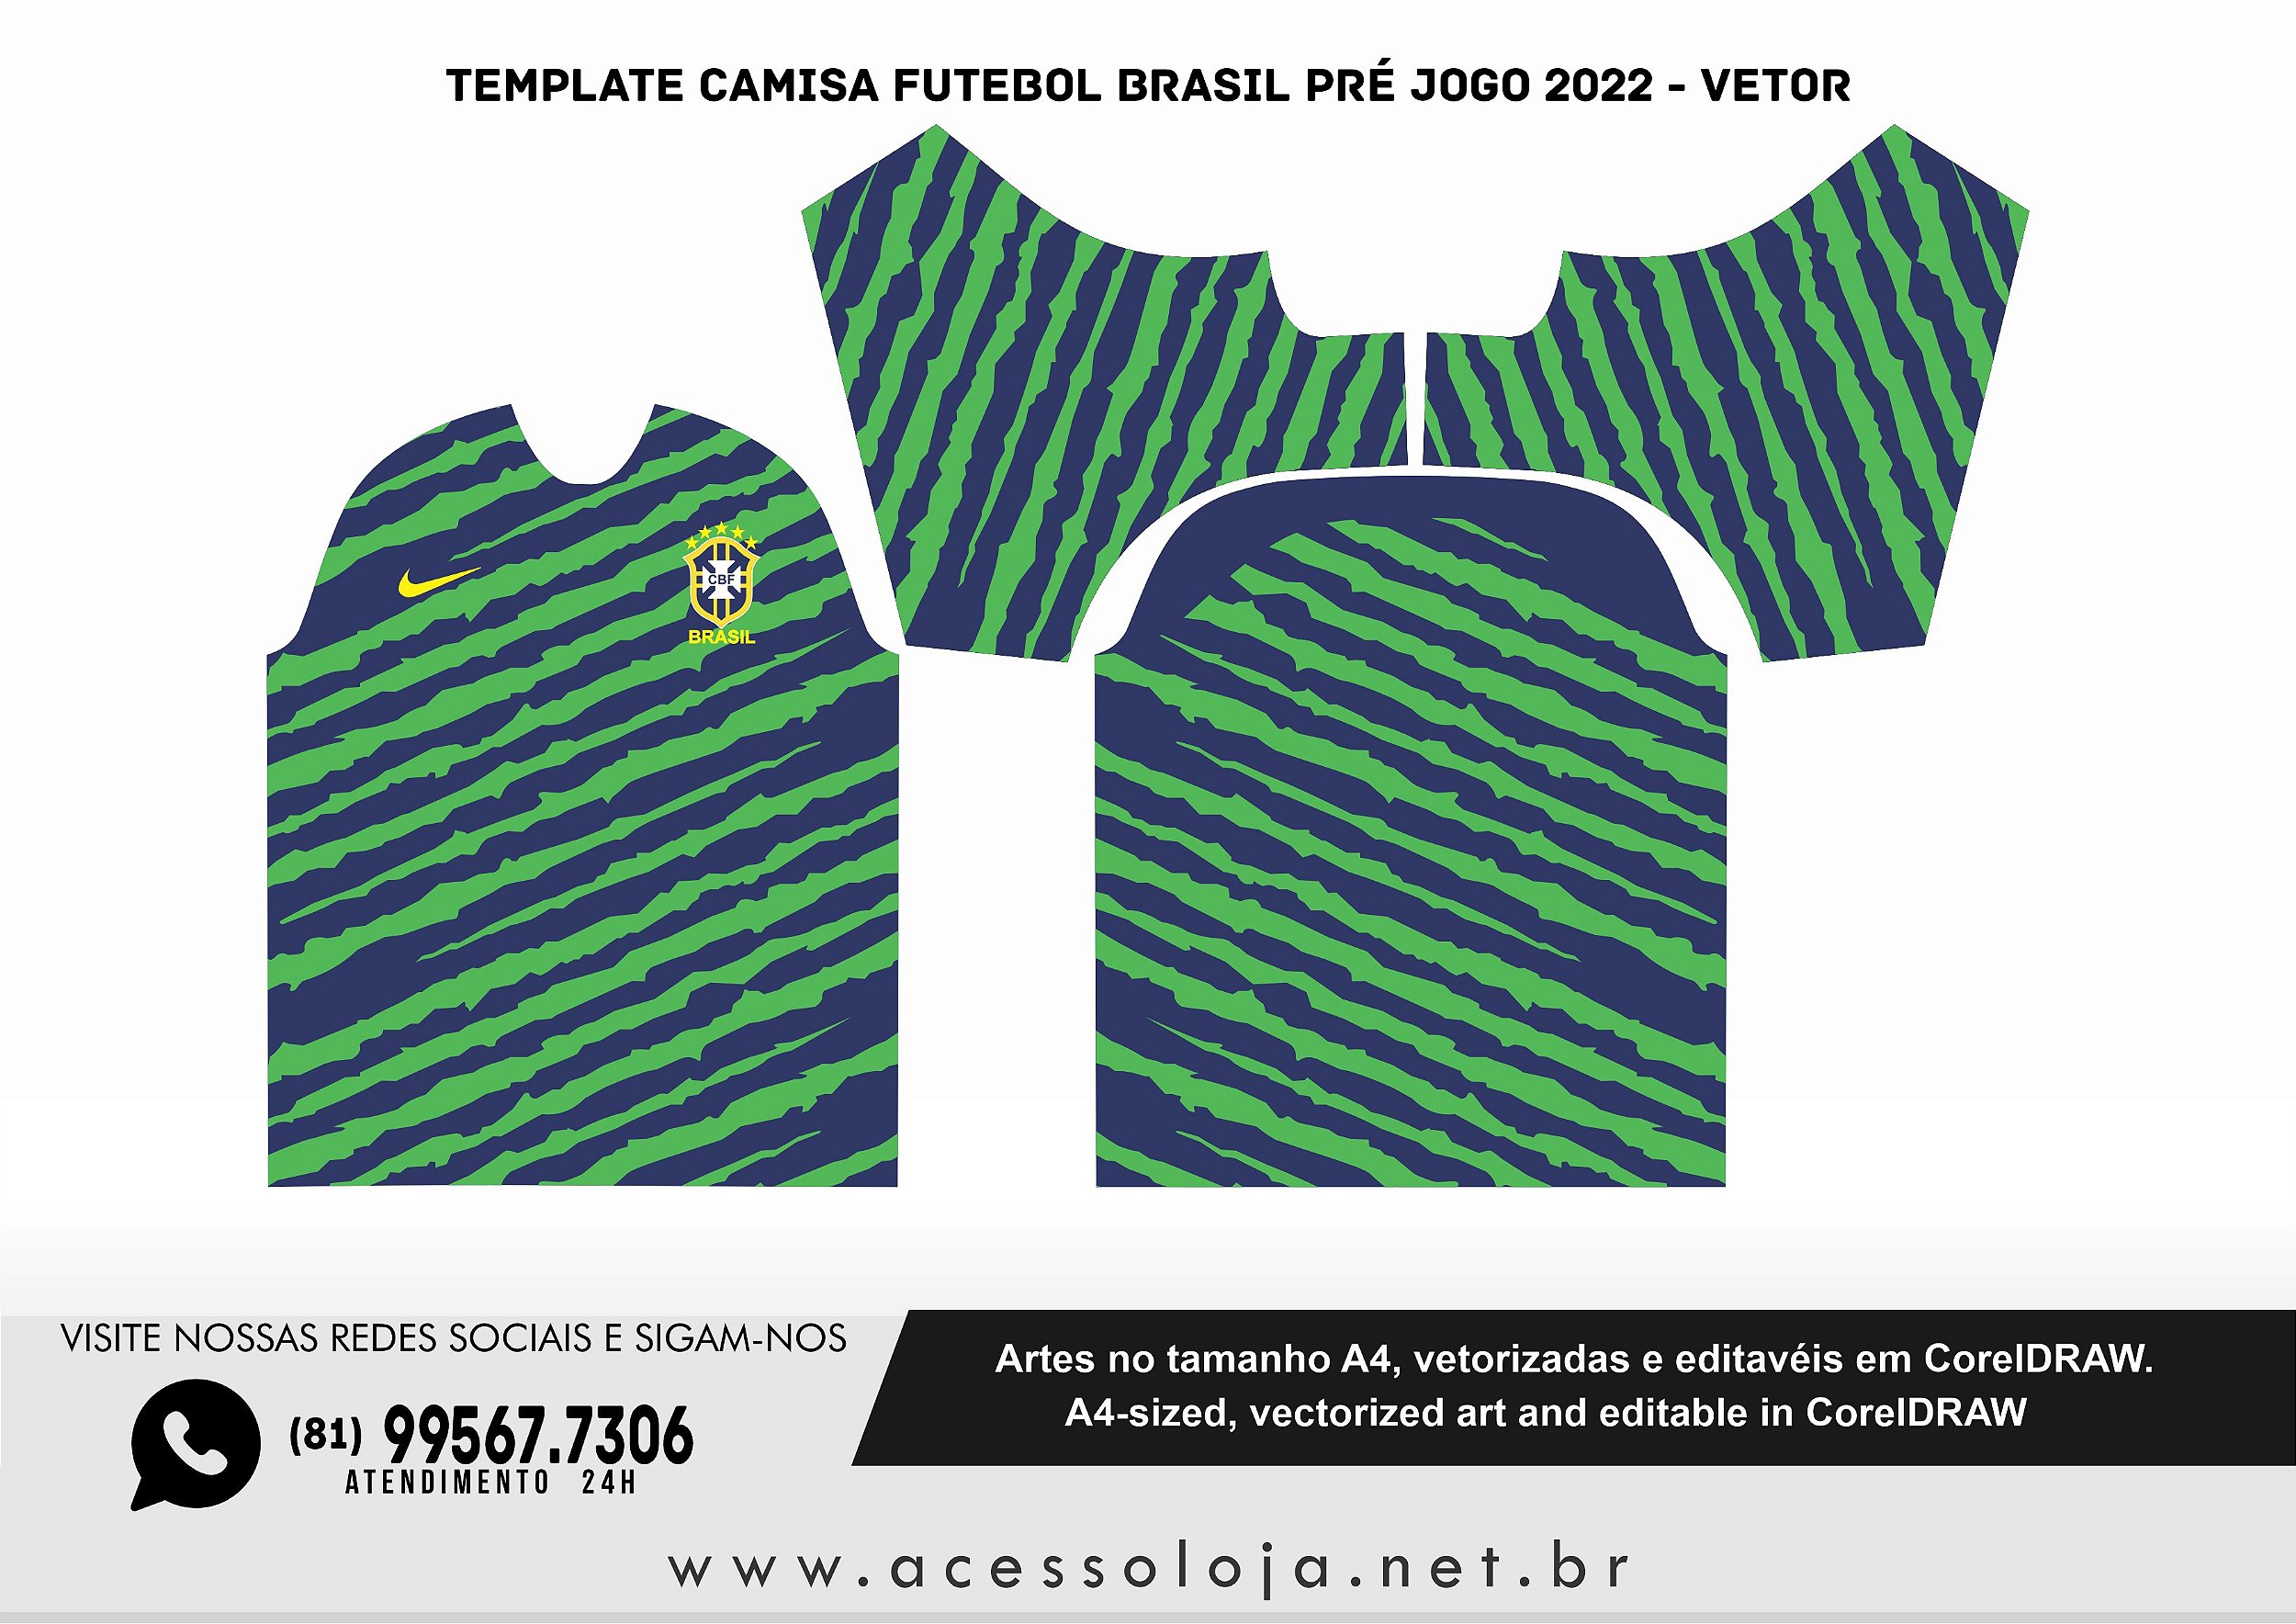 Template Camisa Futebol brasil pré jogo 2022 - Vetor - Acesso Loja - A sua  loja gráfica